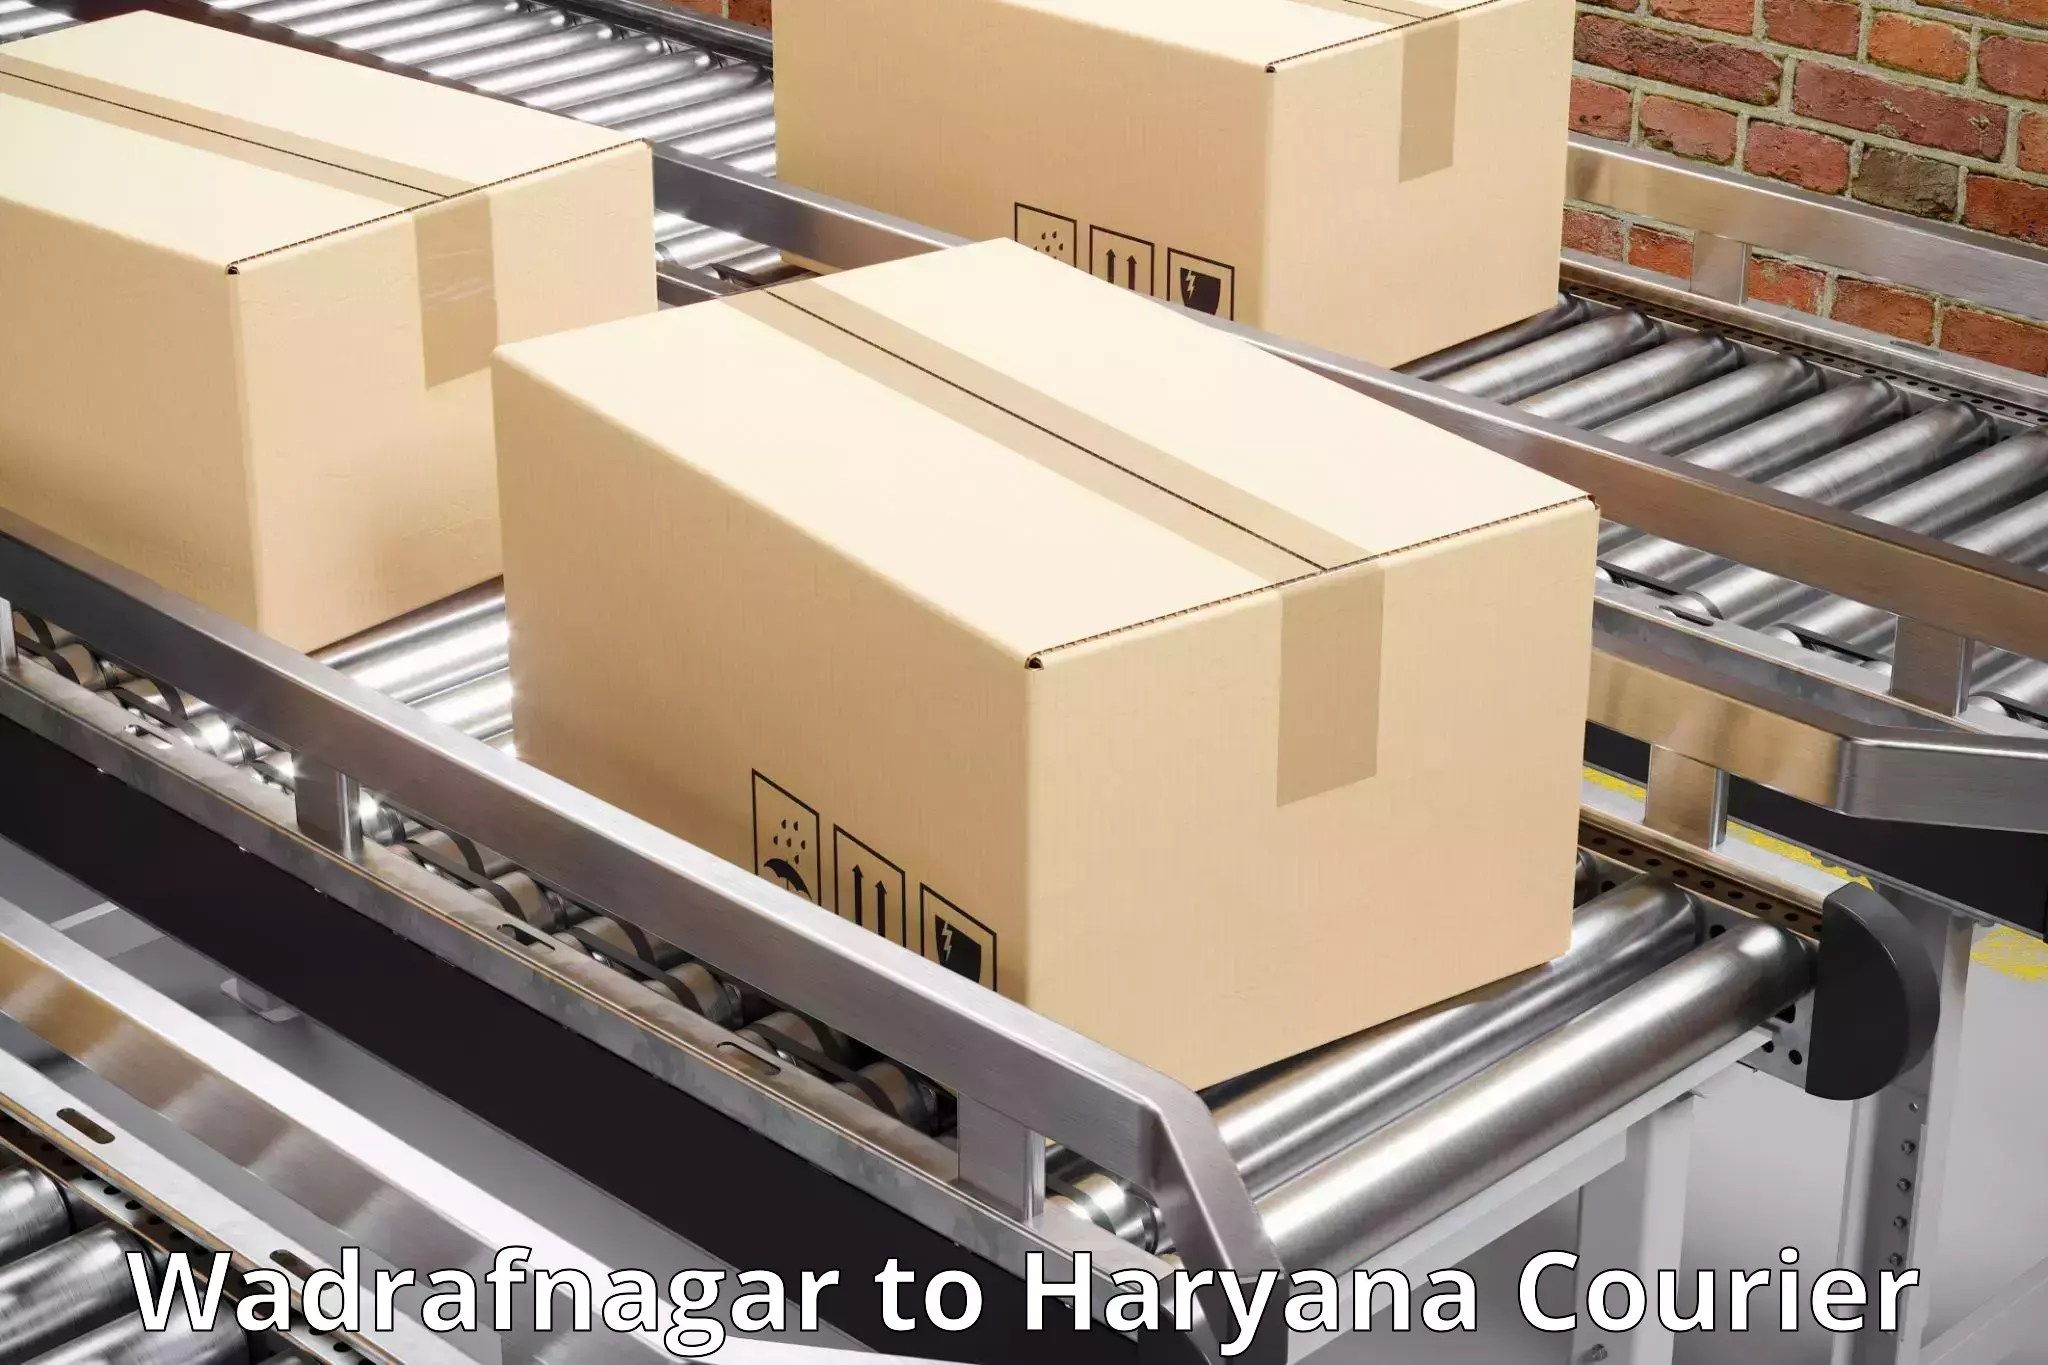 Logistics management Wadrafnagar to Haryana